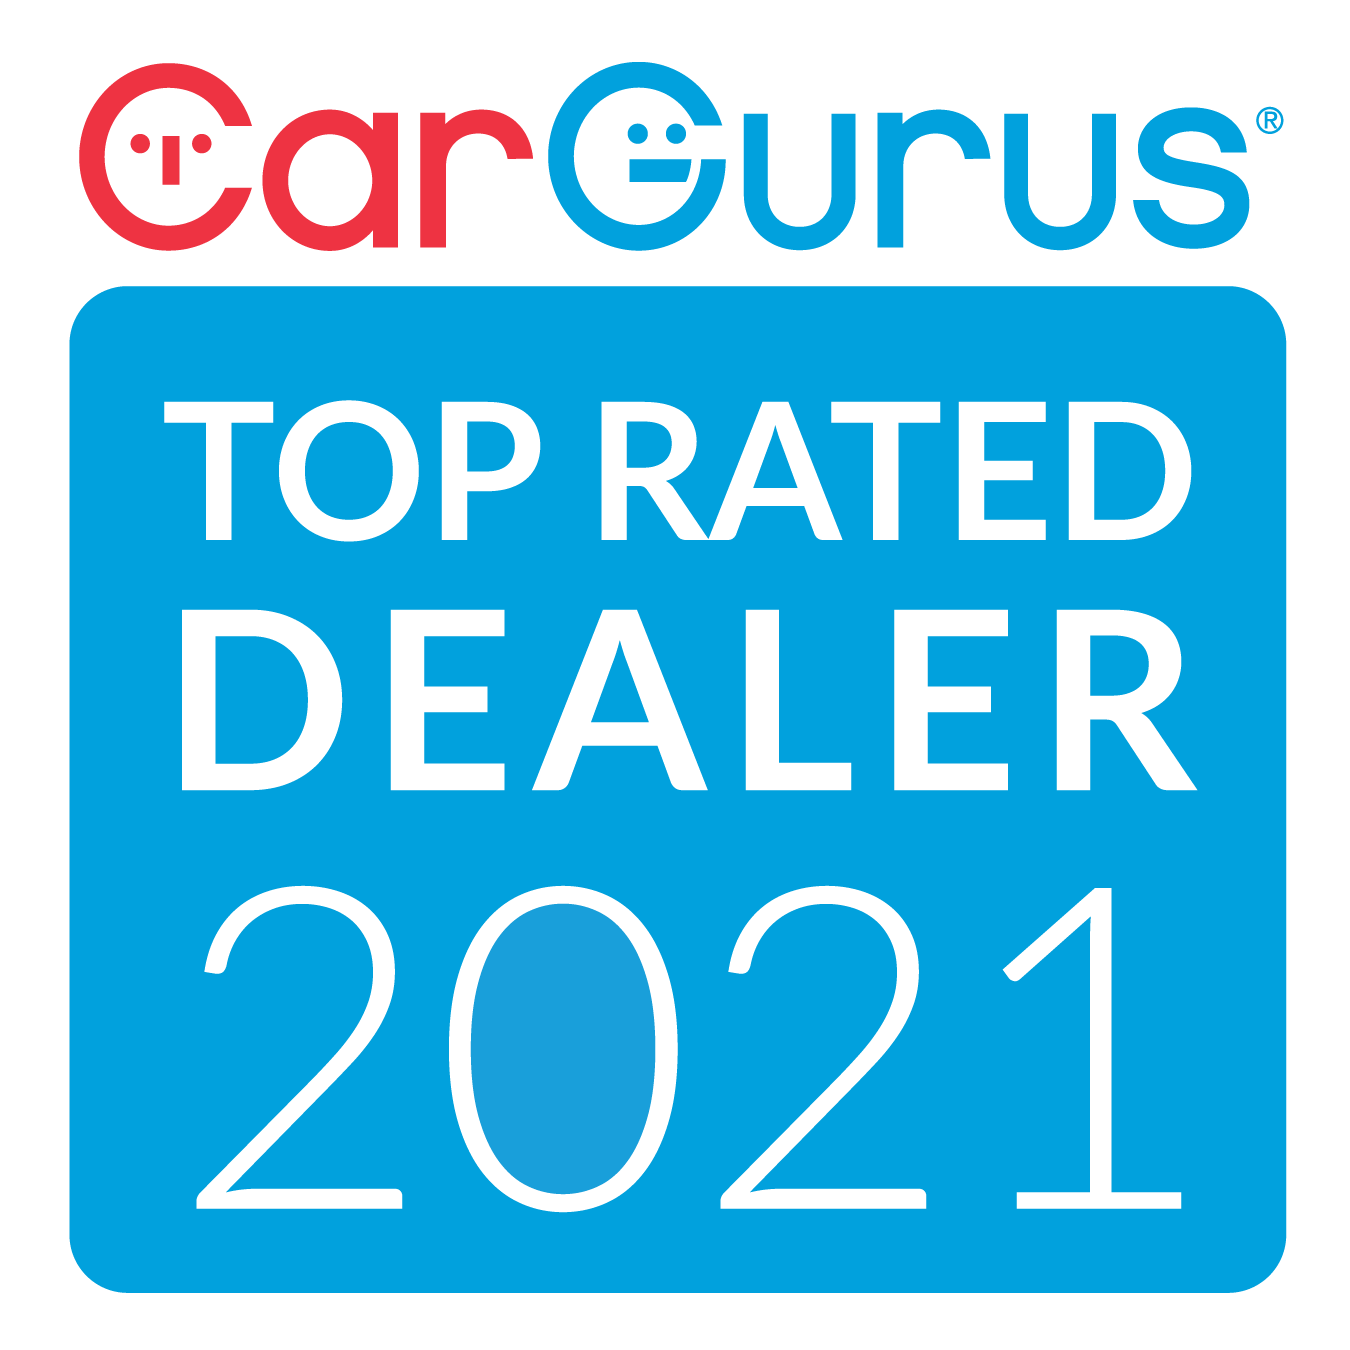 CarGurus Top Rated Dealer